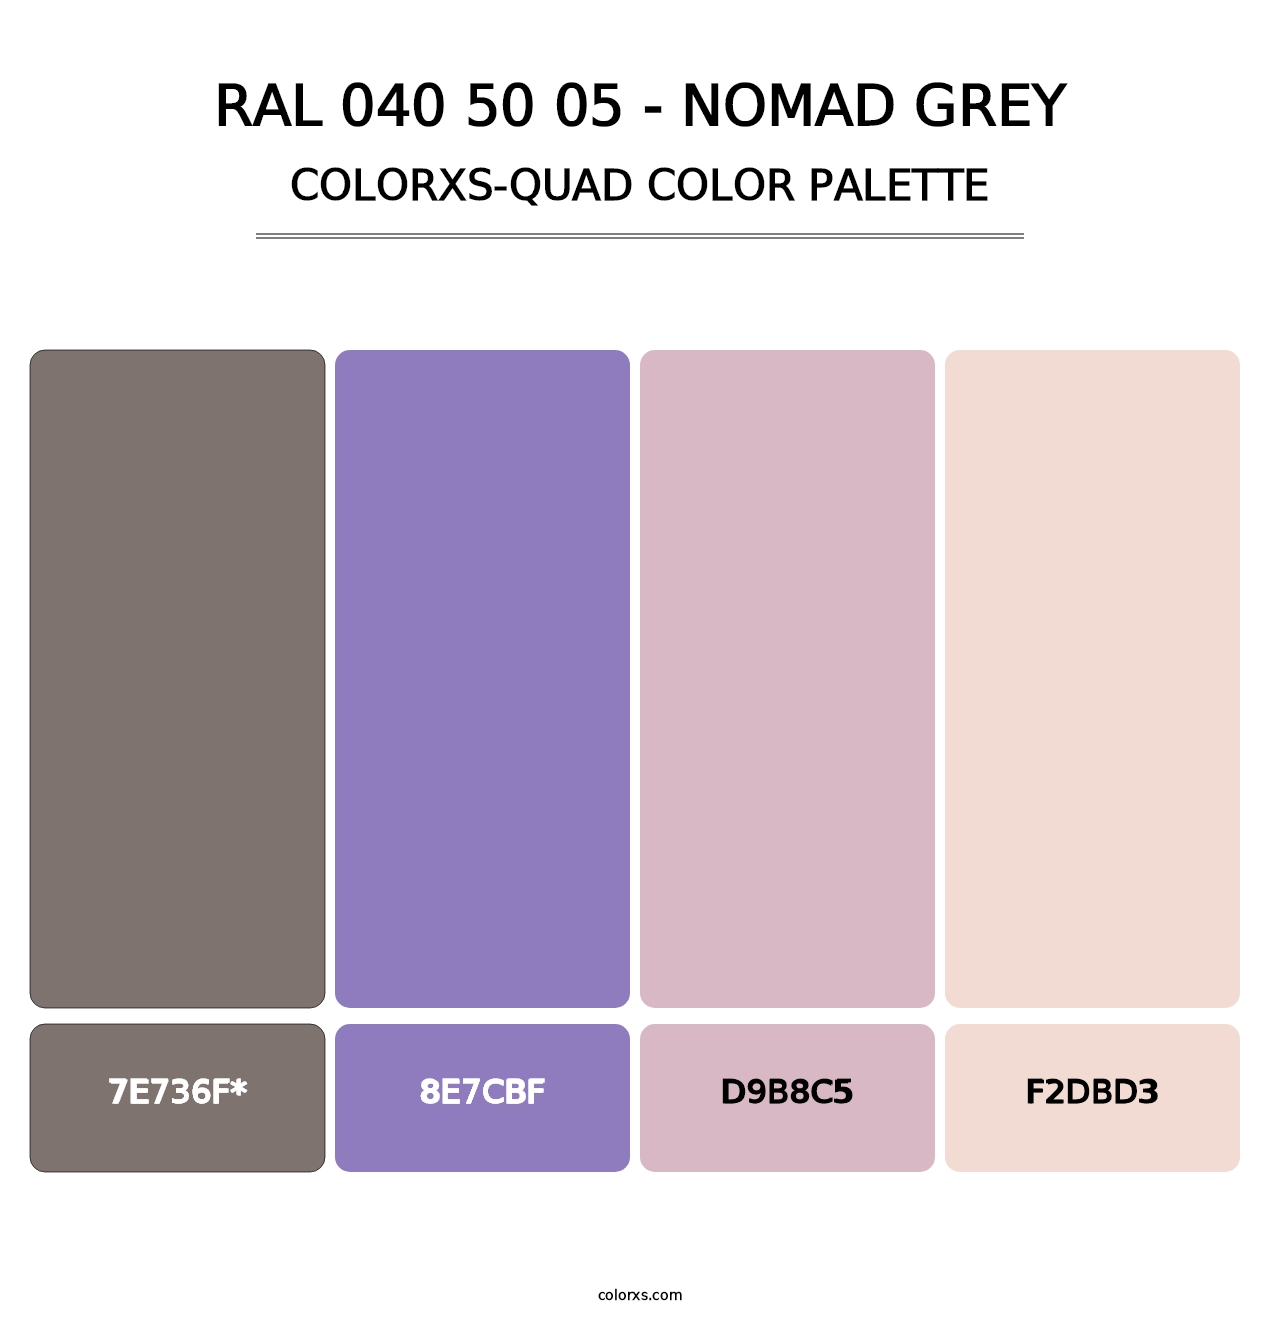 RAL 040 50 05 - Nomad Grey - Colorxs Quad Palette